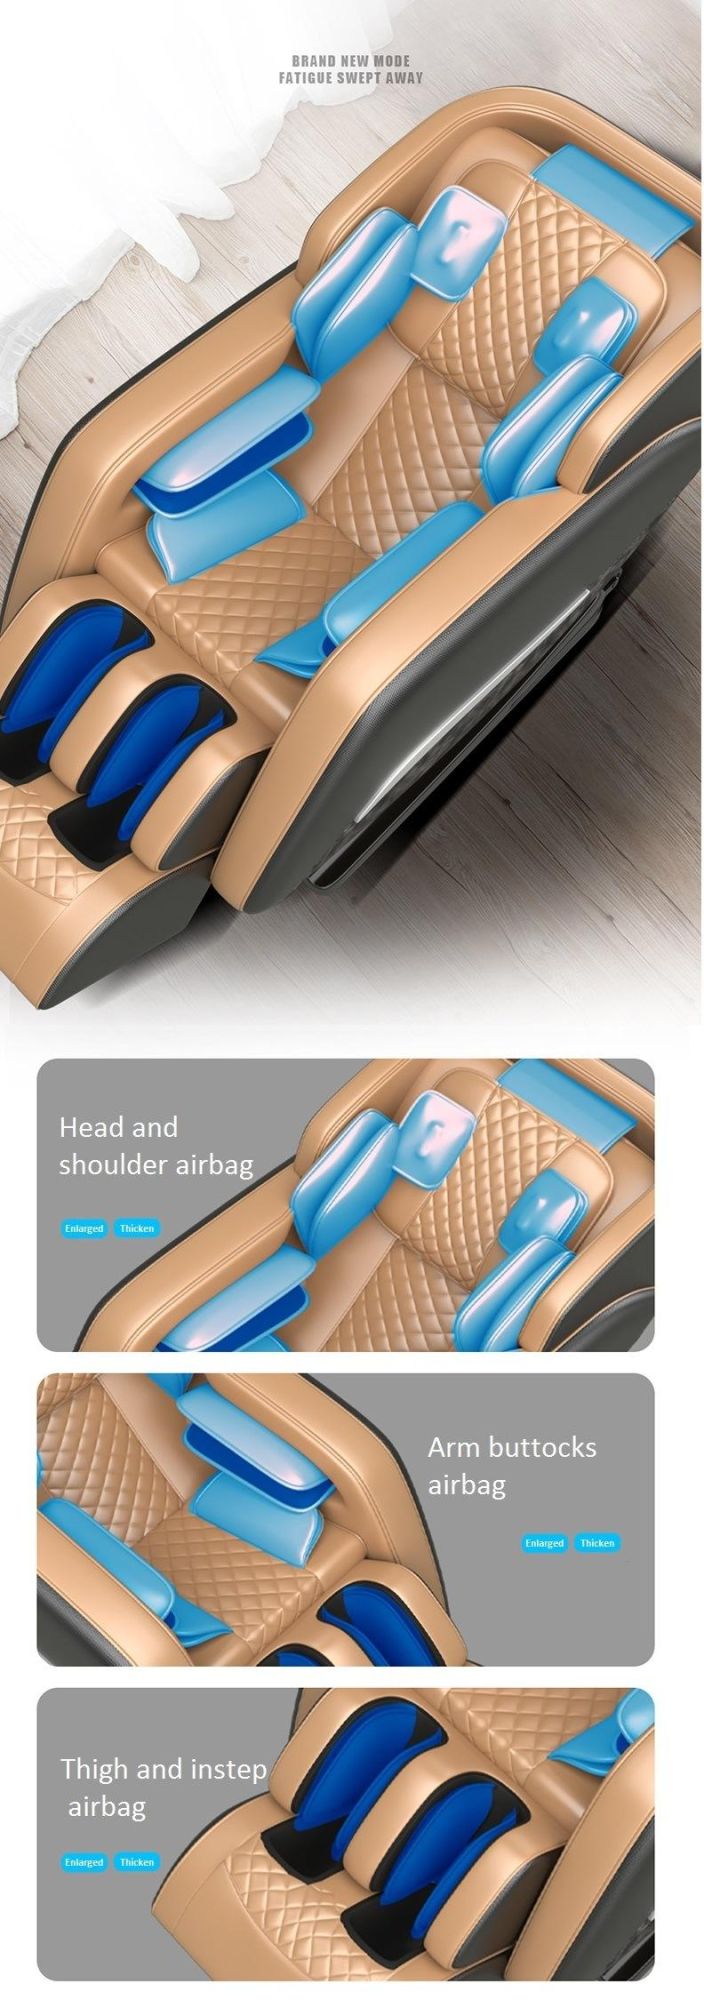 Luxury Massage Chair Voice Control Price Electric for Full Body Zero Gravity Recliner Ergonomic Sofa Massager